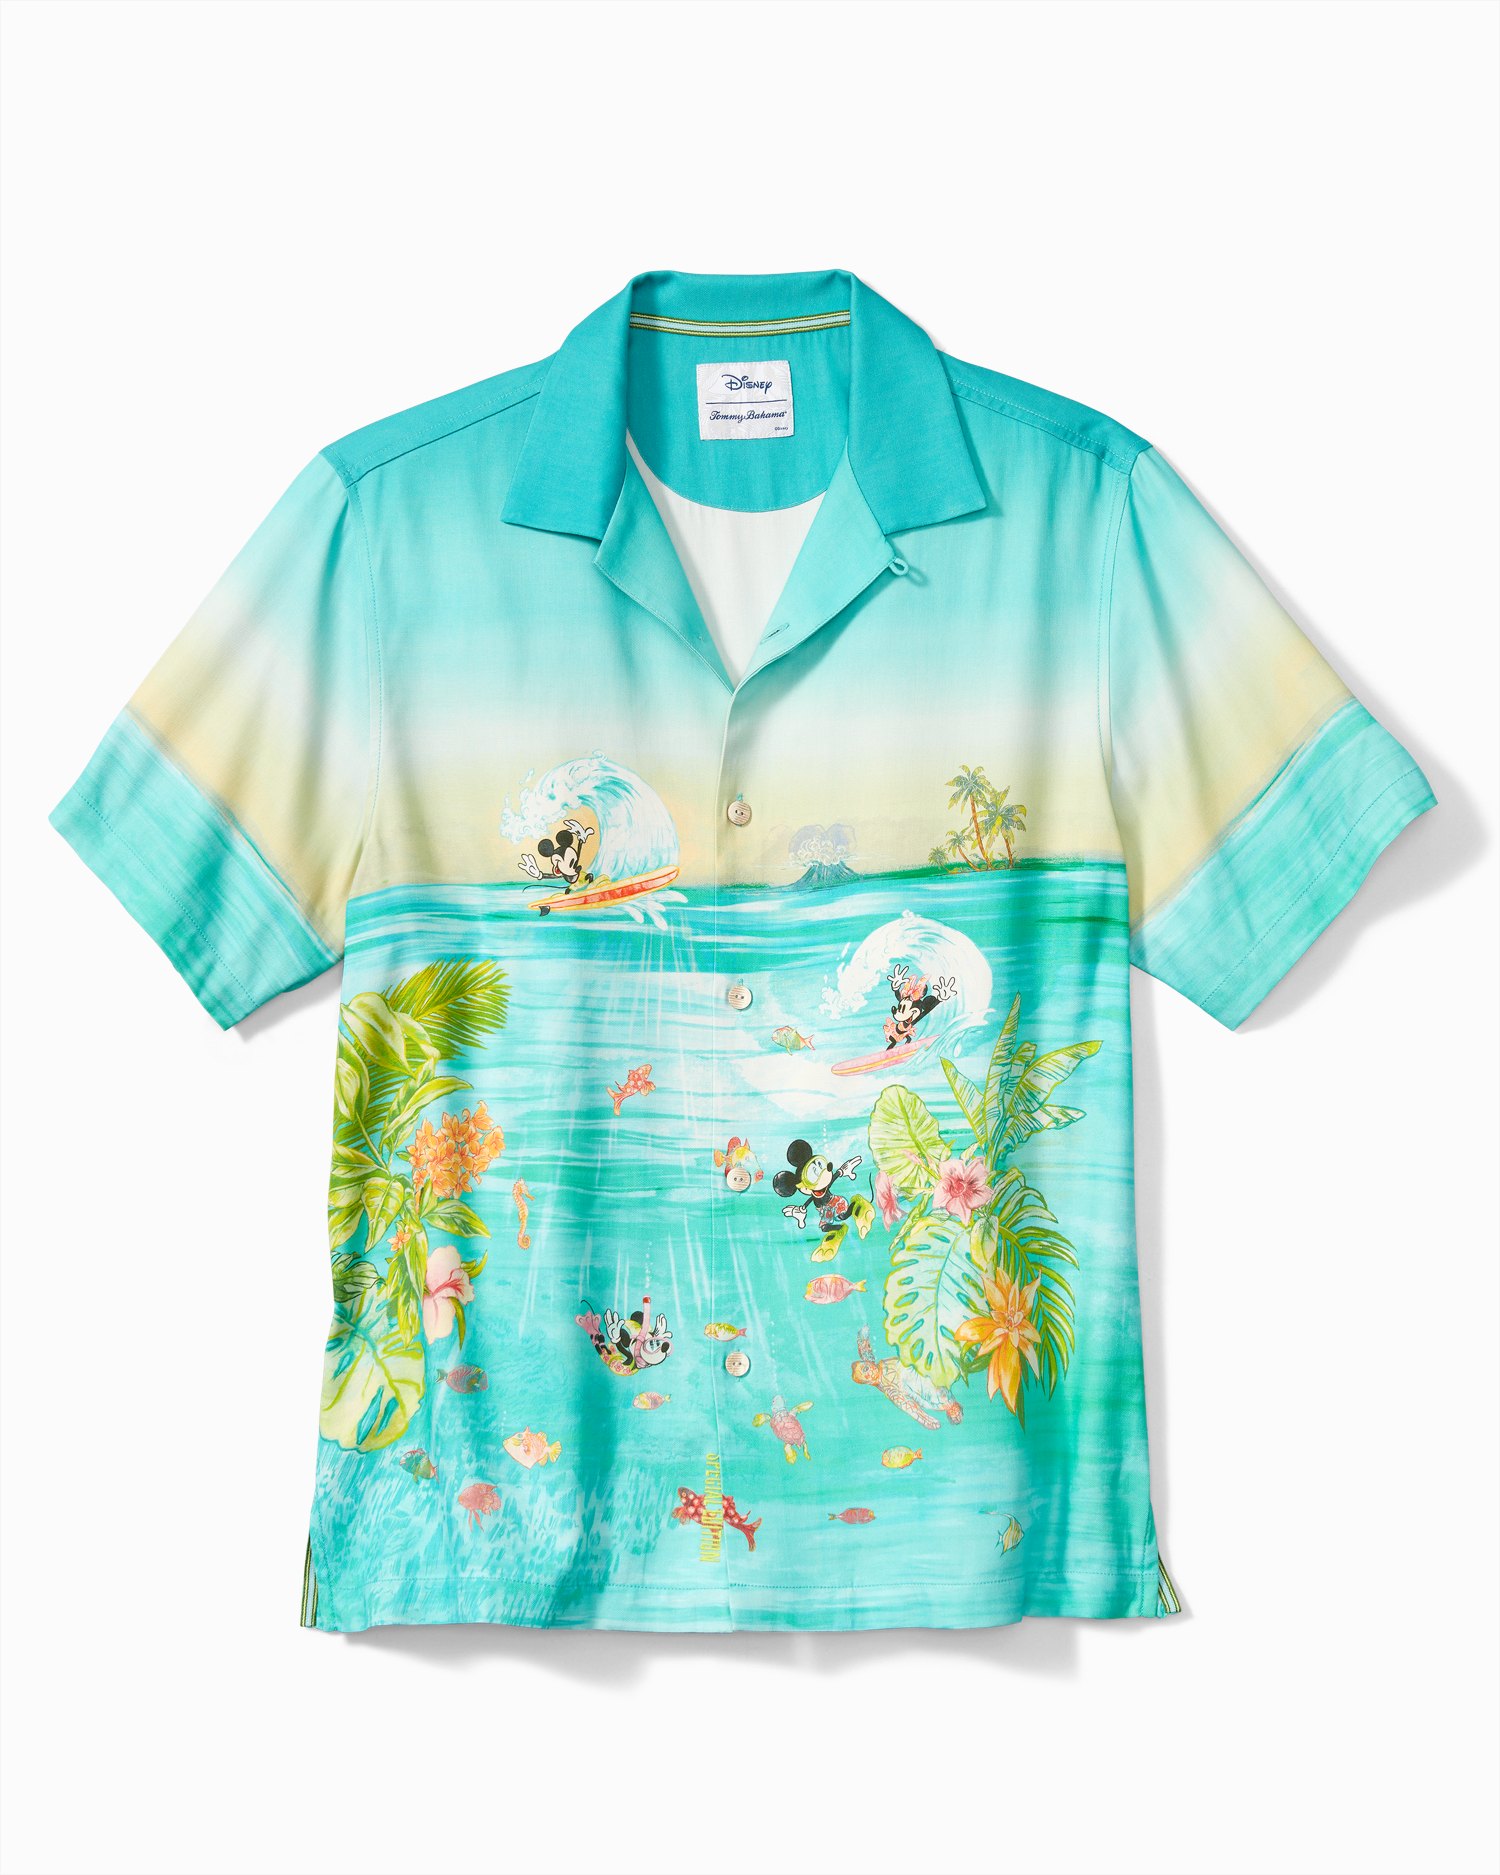 Disney Under the Sea Silk Camp Shirt front - AllEars.Net